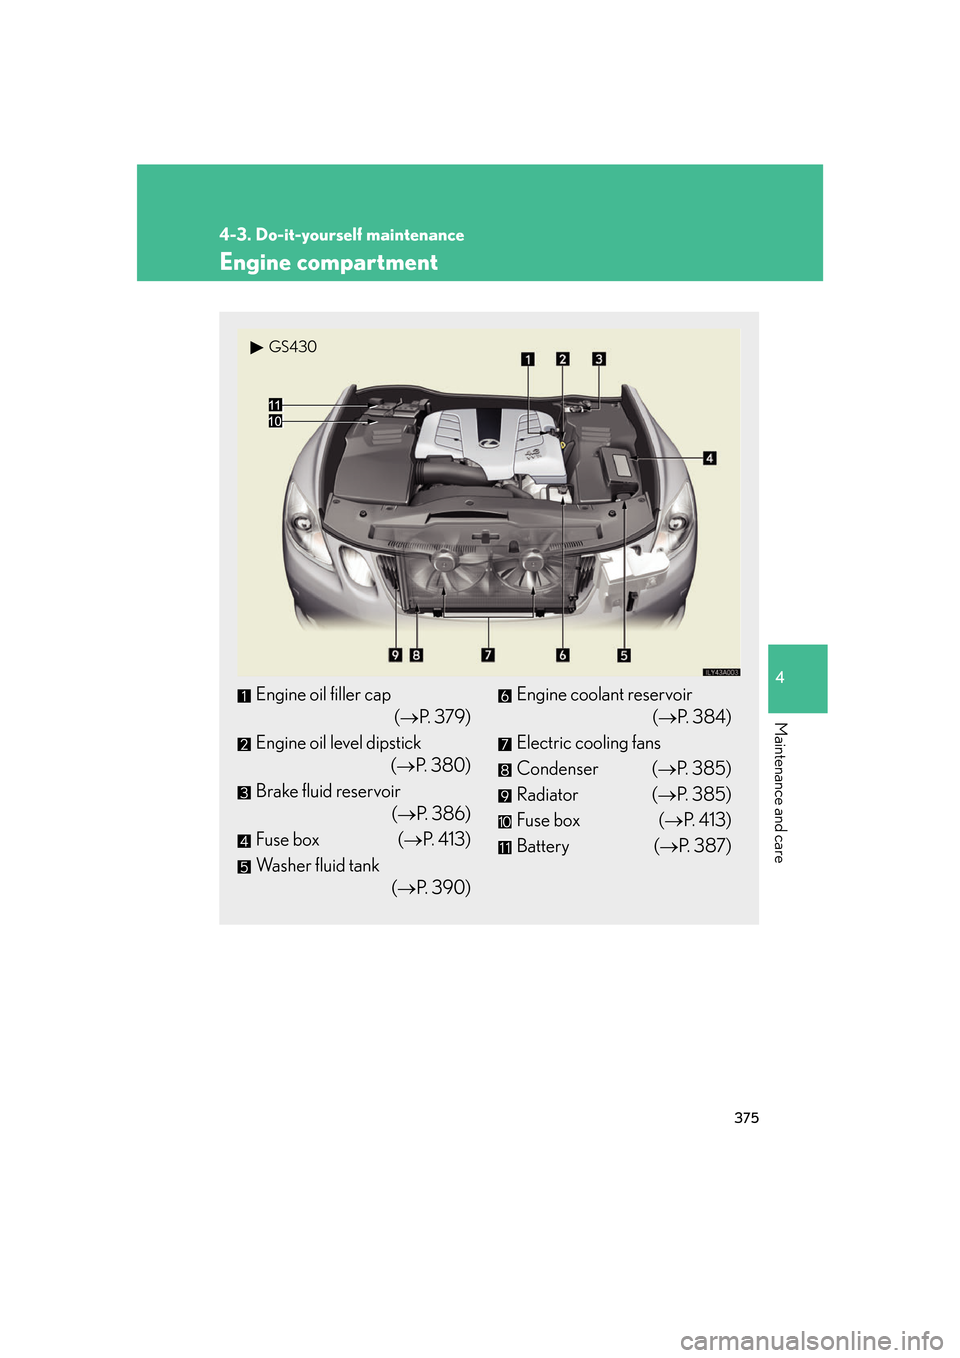 Lexus GS350 2007  Anti-theft system / LEXUS 2007 GS430/350 OWNERS MANUAL (OM30A04U) 375
4-3. Do-it-yourself maintenance
4
Maintenance and care
Engine compartment
Engine oil filler cap
( P.  3 7 9 )
Engine oil level dipstick 
( P. 380)
Brake fluid reservoir (P. 386)
